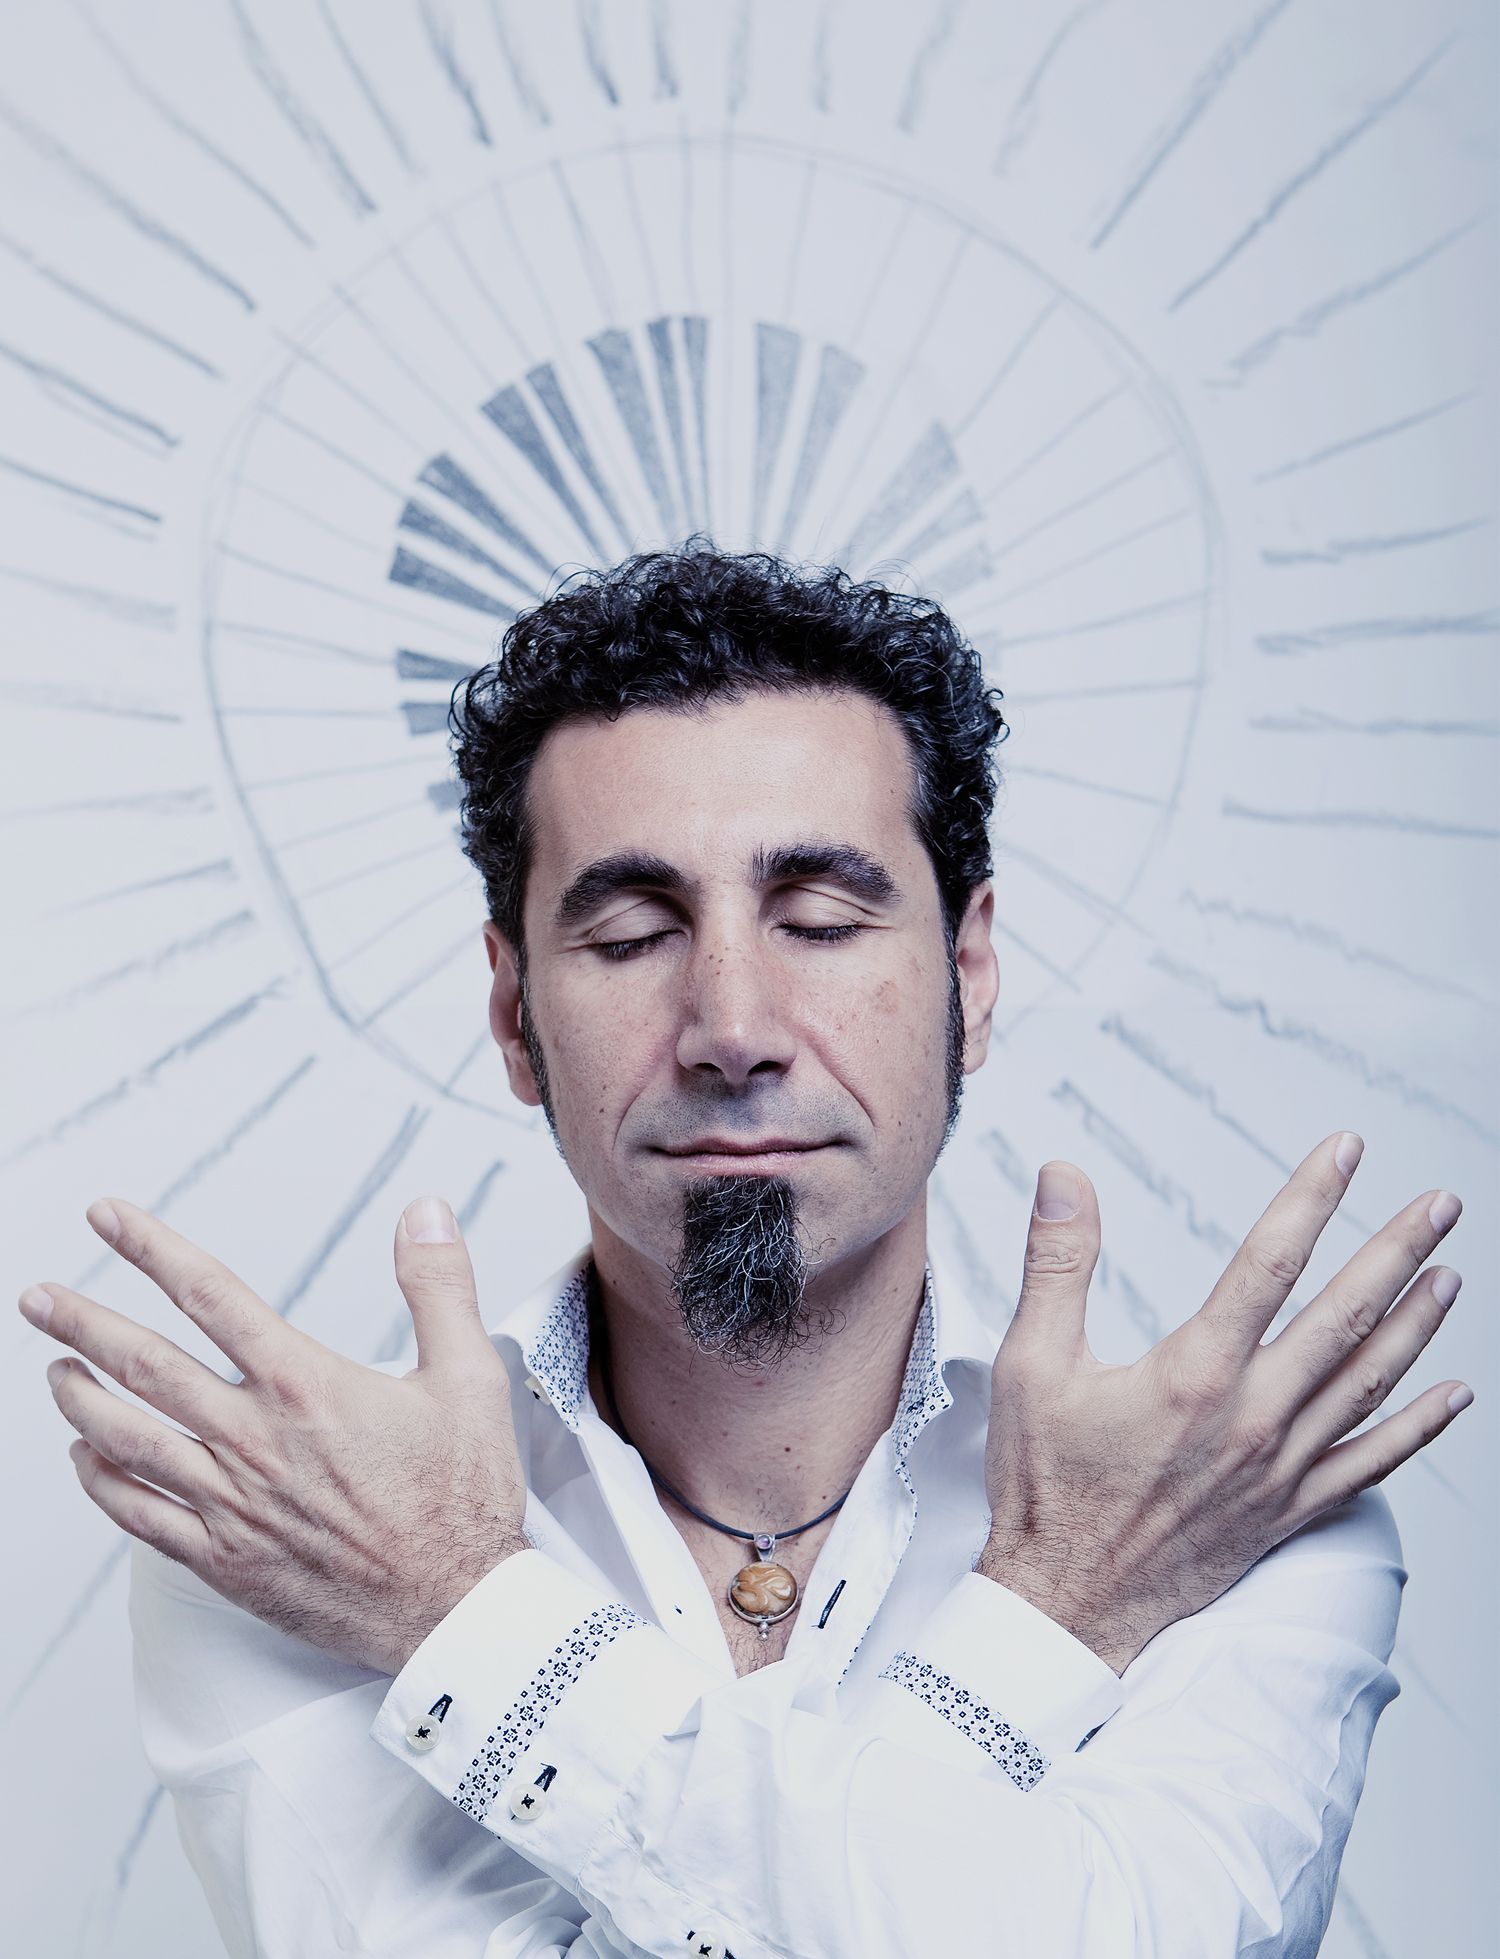 Edygrim The Dj Sur Serj Tankian Empty Walls Np On